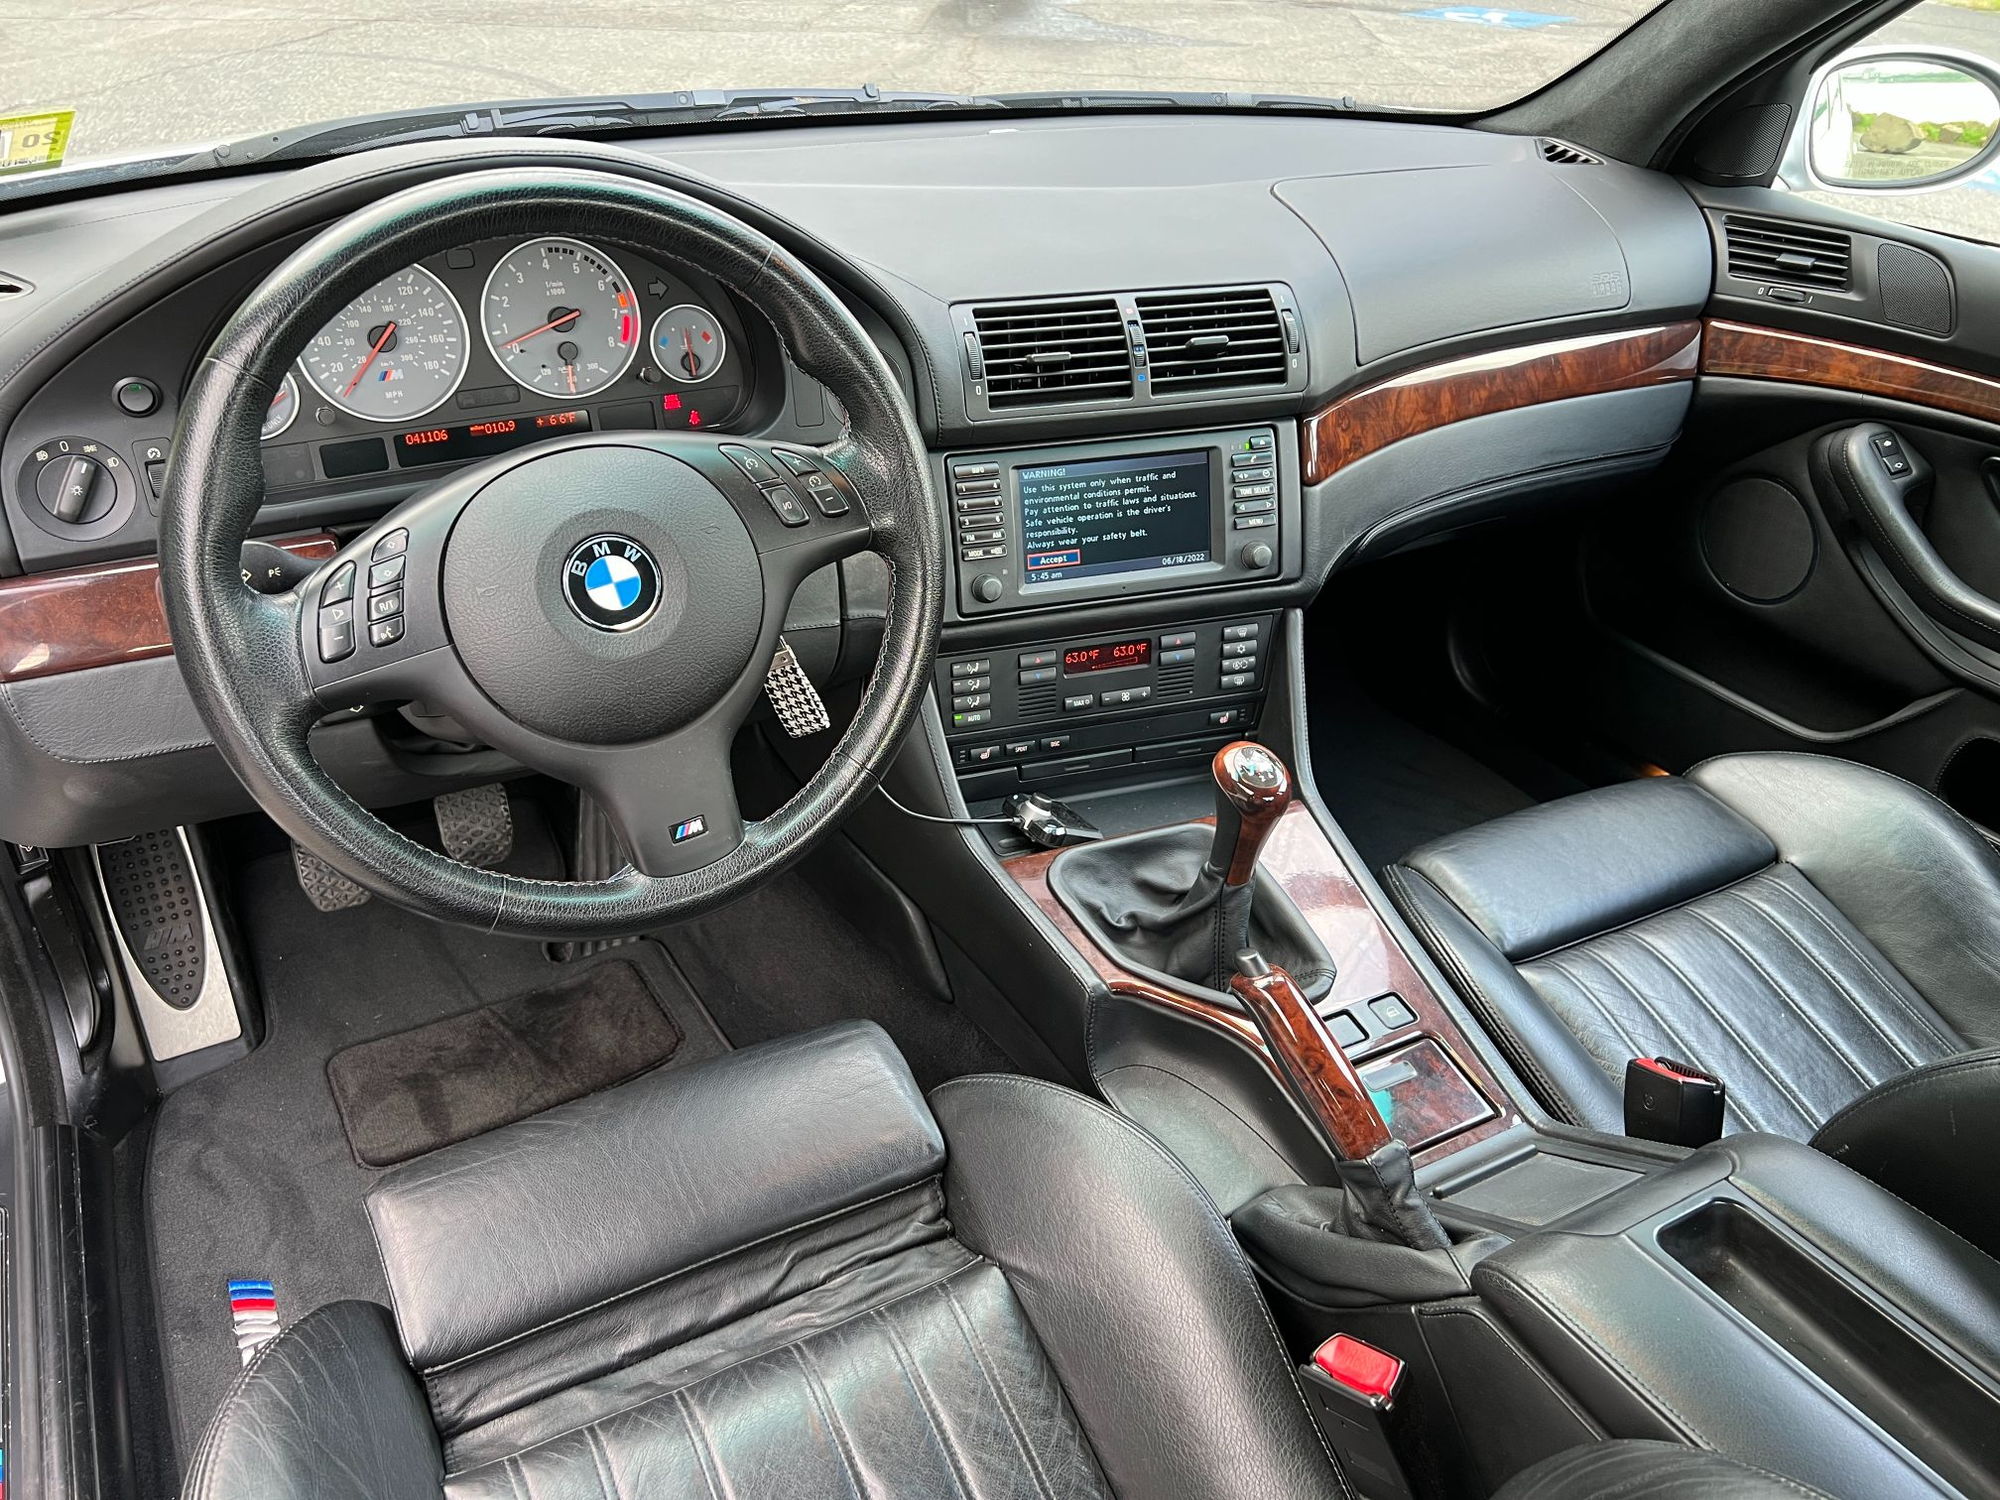 2002 BMW M5 (E39) - 41k miles - Supersprint exhaust, new clutch